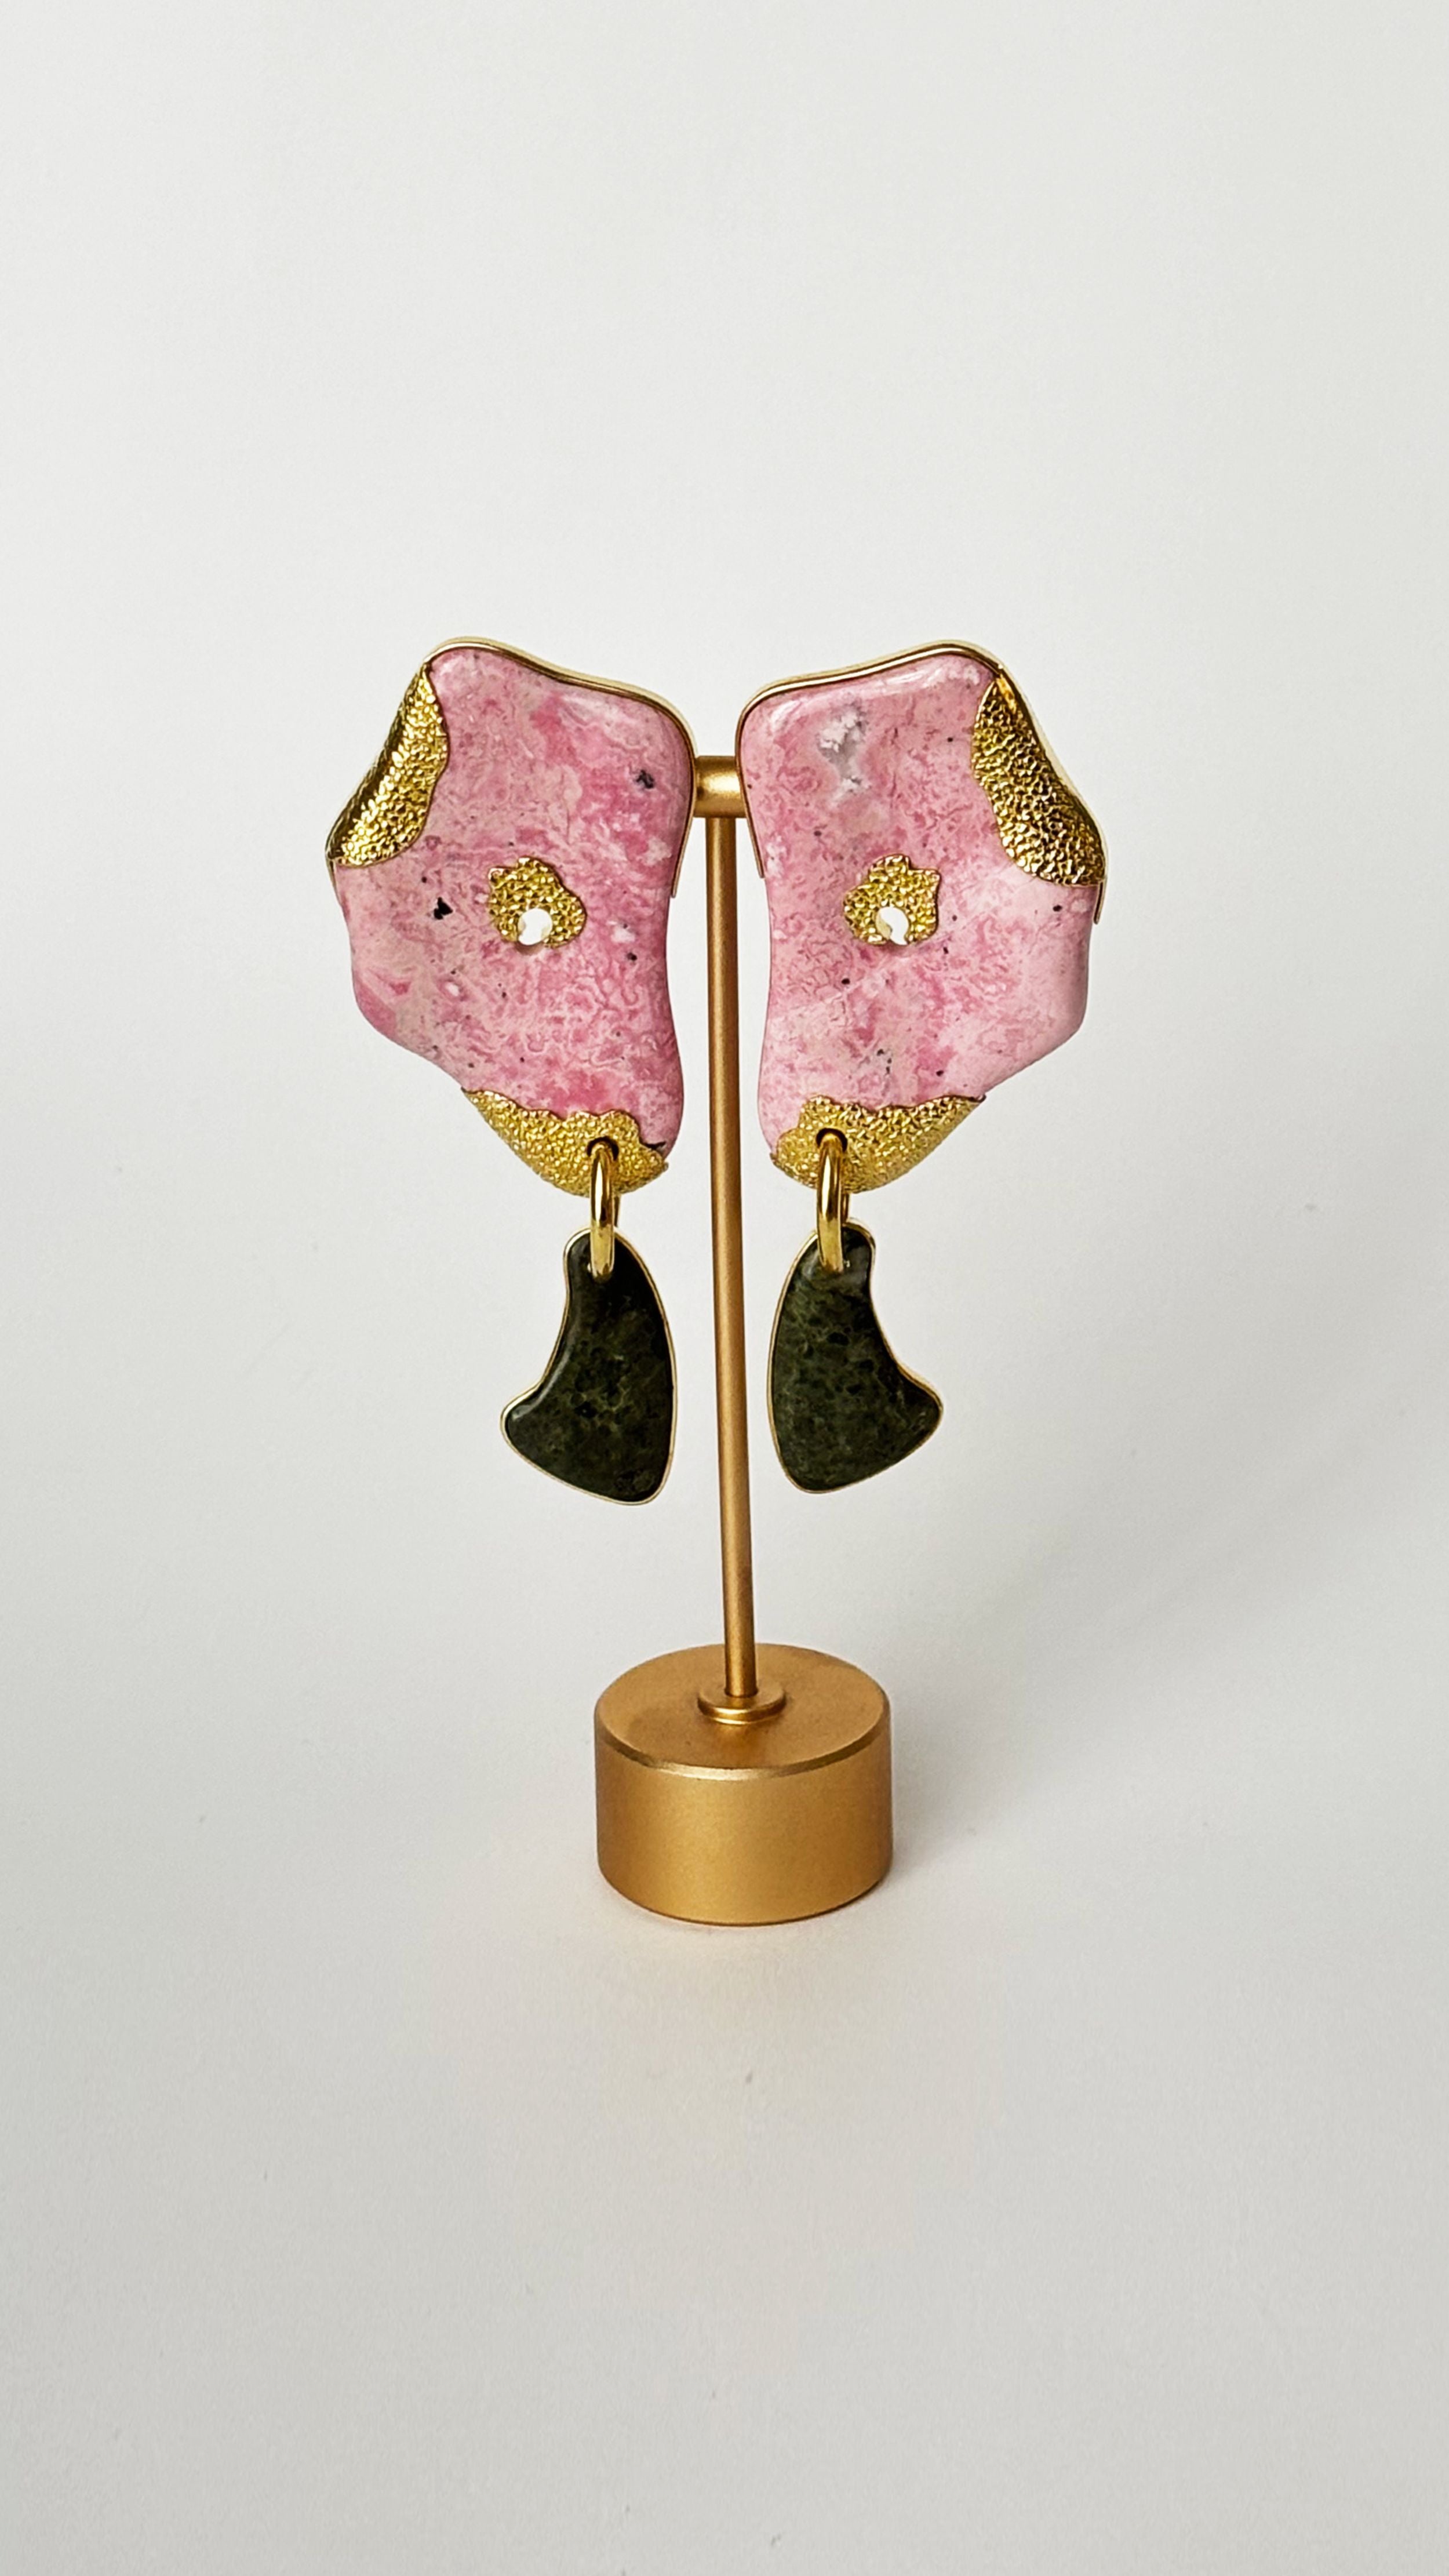 Monica Sordo Profundo Earrings in Pink Rhodonite. Product photo of pair of earrings in organic shape with pink rhodonite body and green drops. 24K gold plated drop earrings.